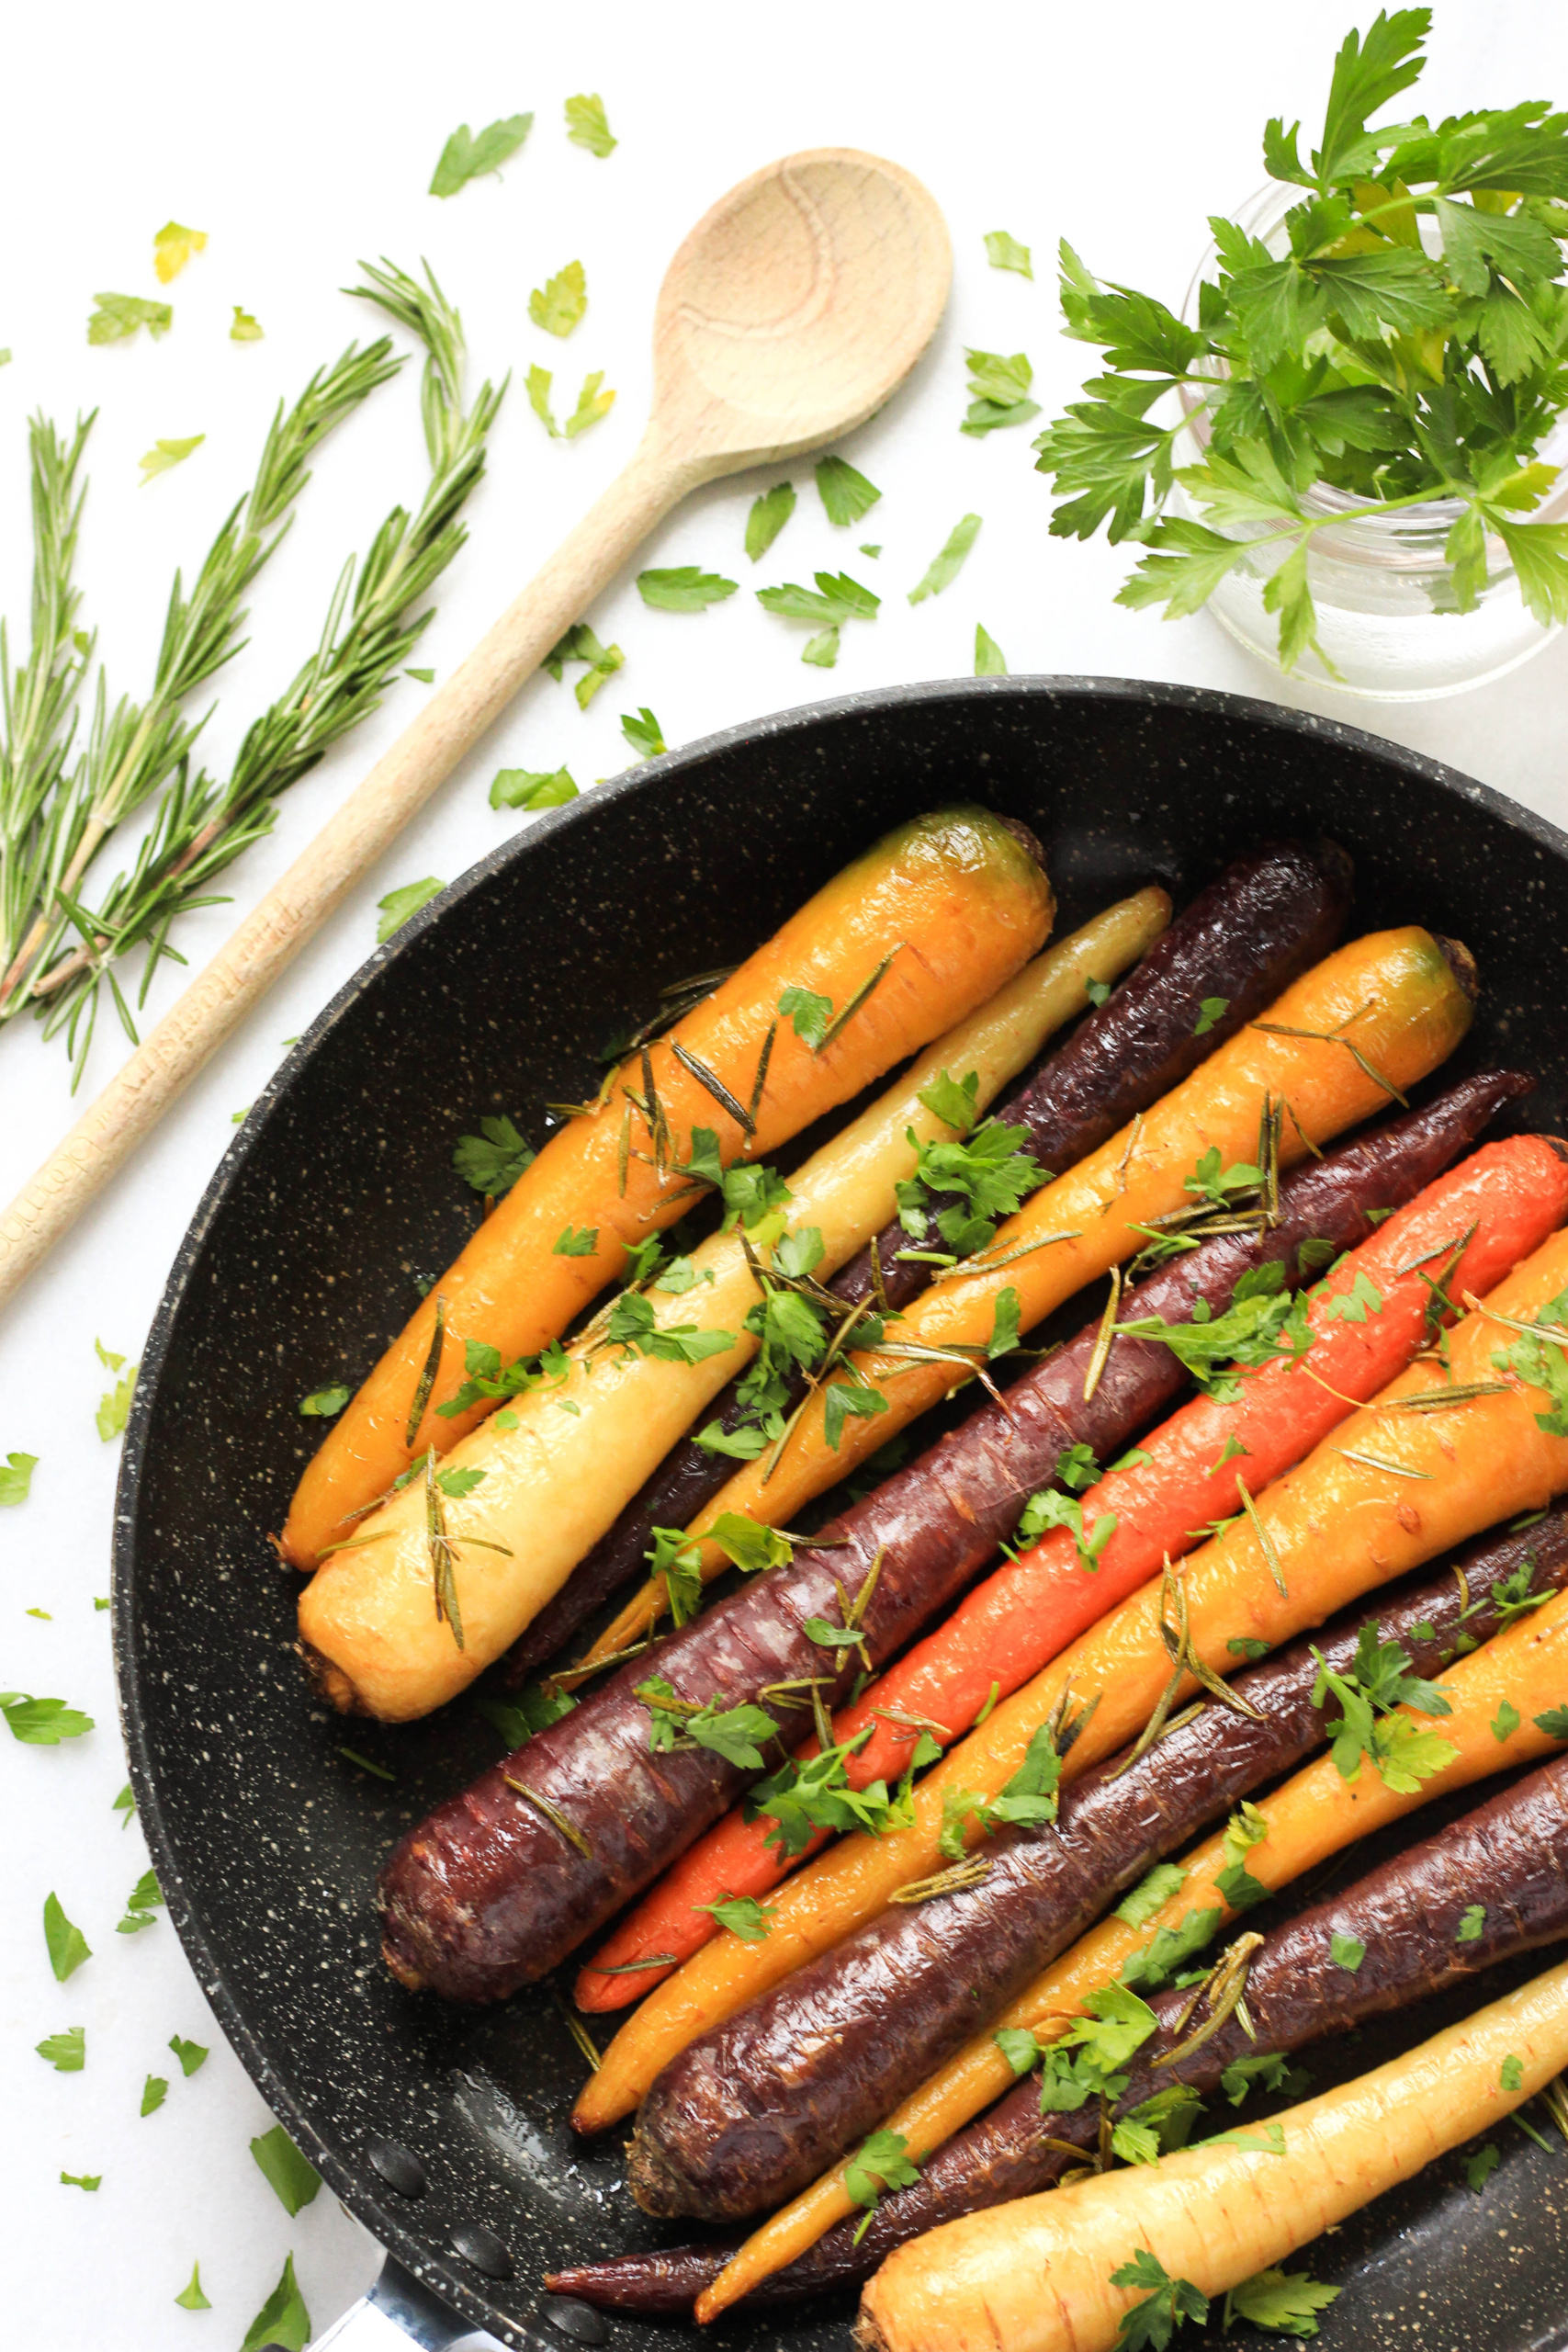 Rainbow carrots garnished with fresh herbs.